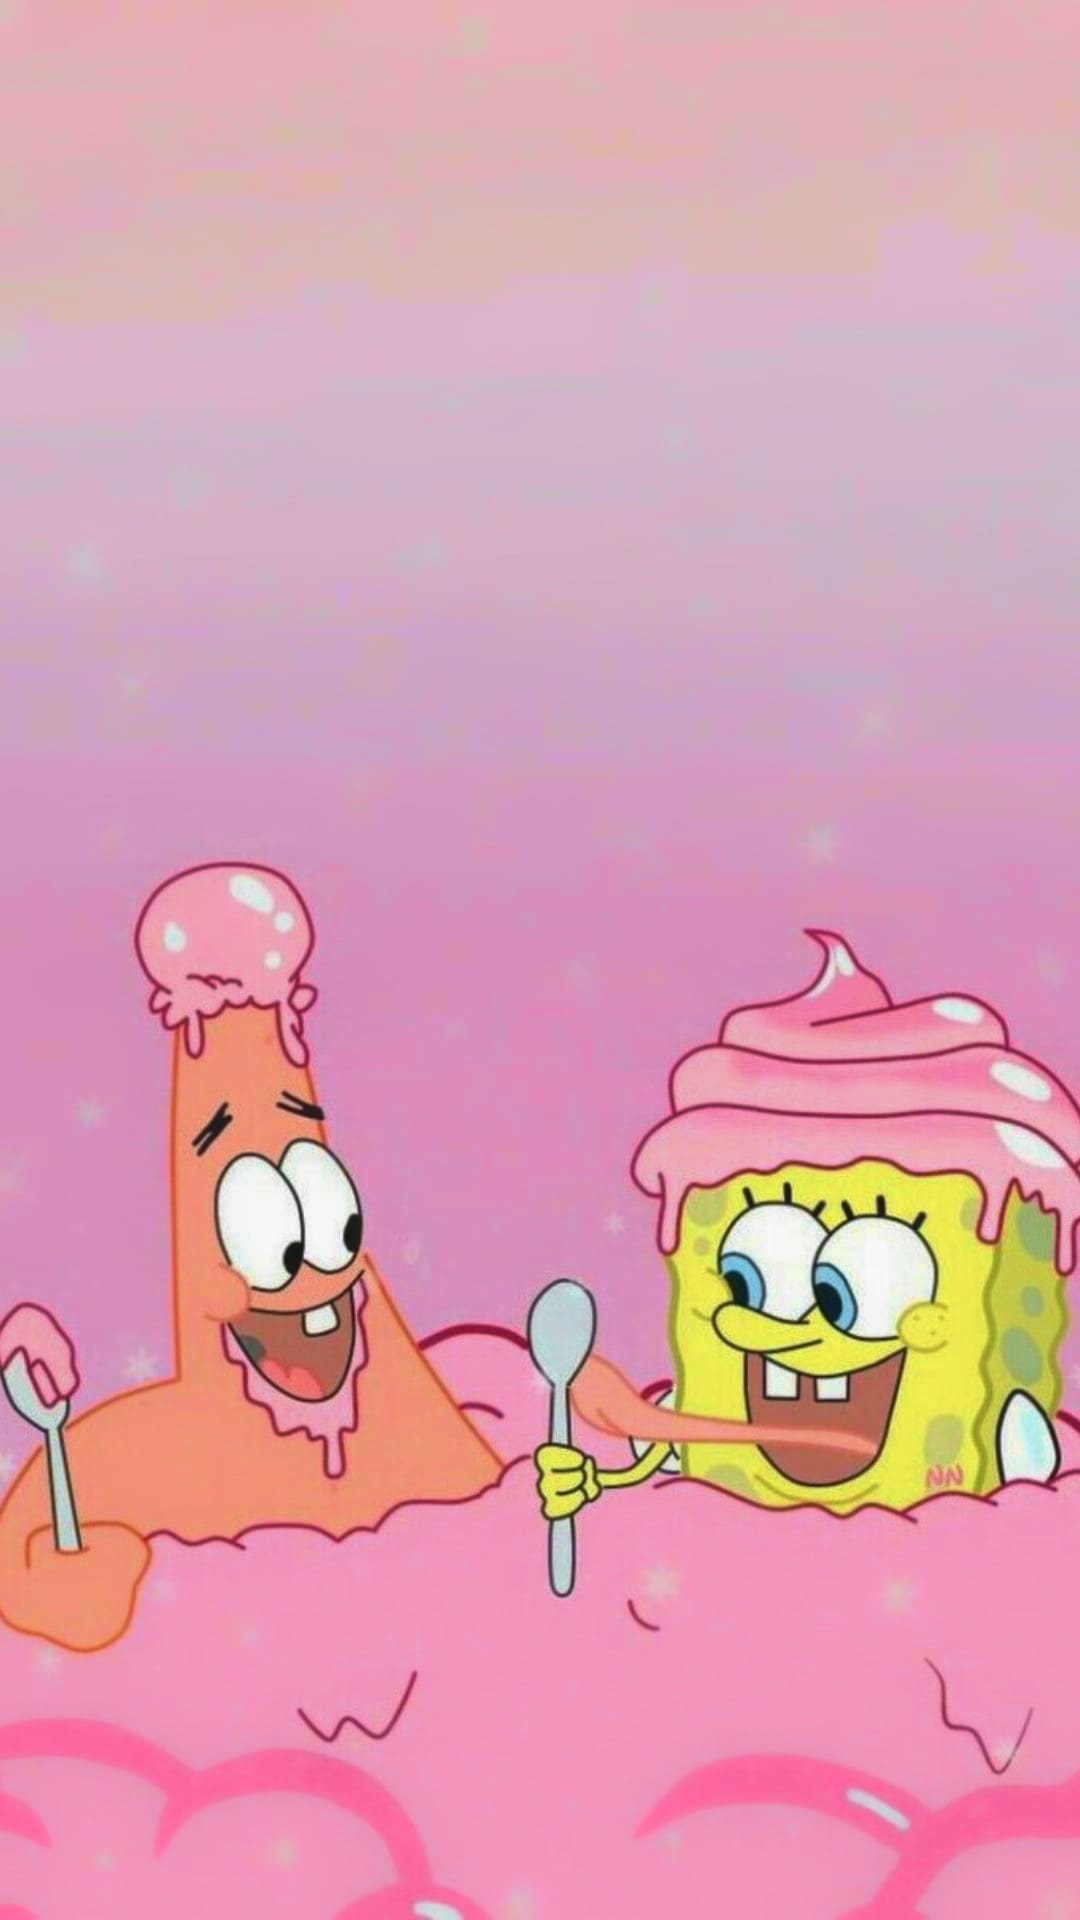 Spongebob And Patrick Wallpaper Spongebob And Patrick Wallpaper Download